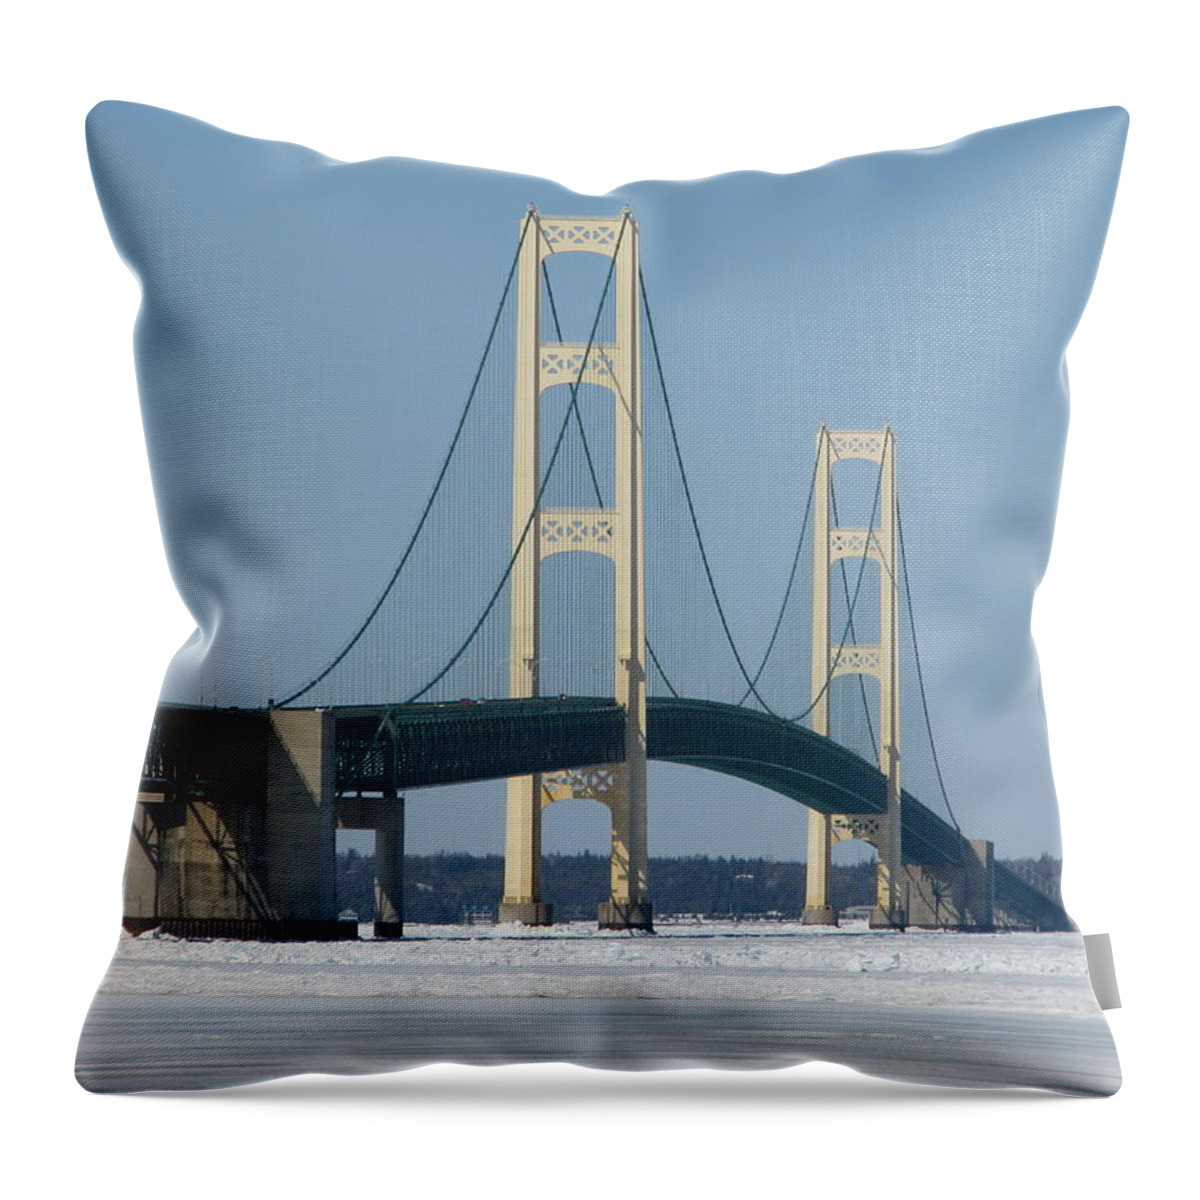 Mackinac Bridge Throw Pillow featuring the photograph Mackinac Bridge in Winter by Keith Stokes